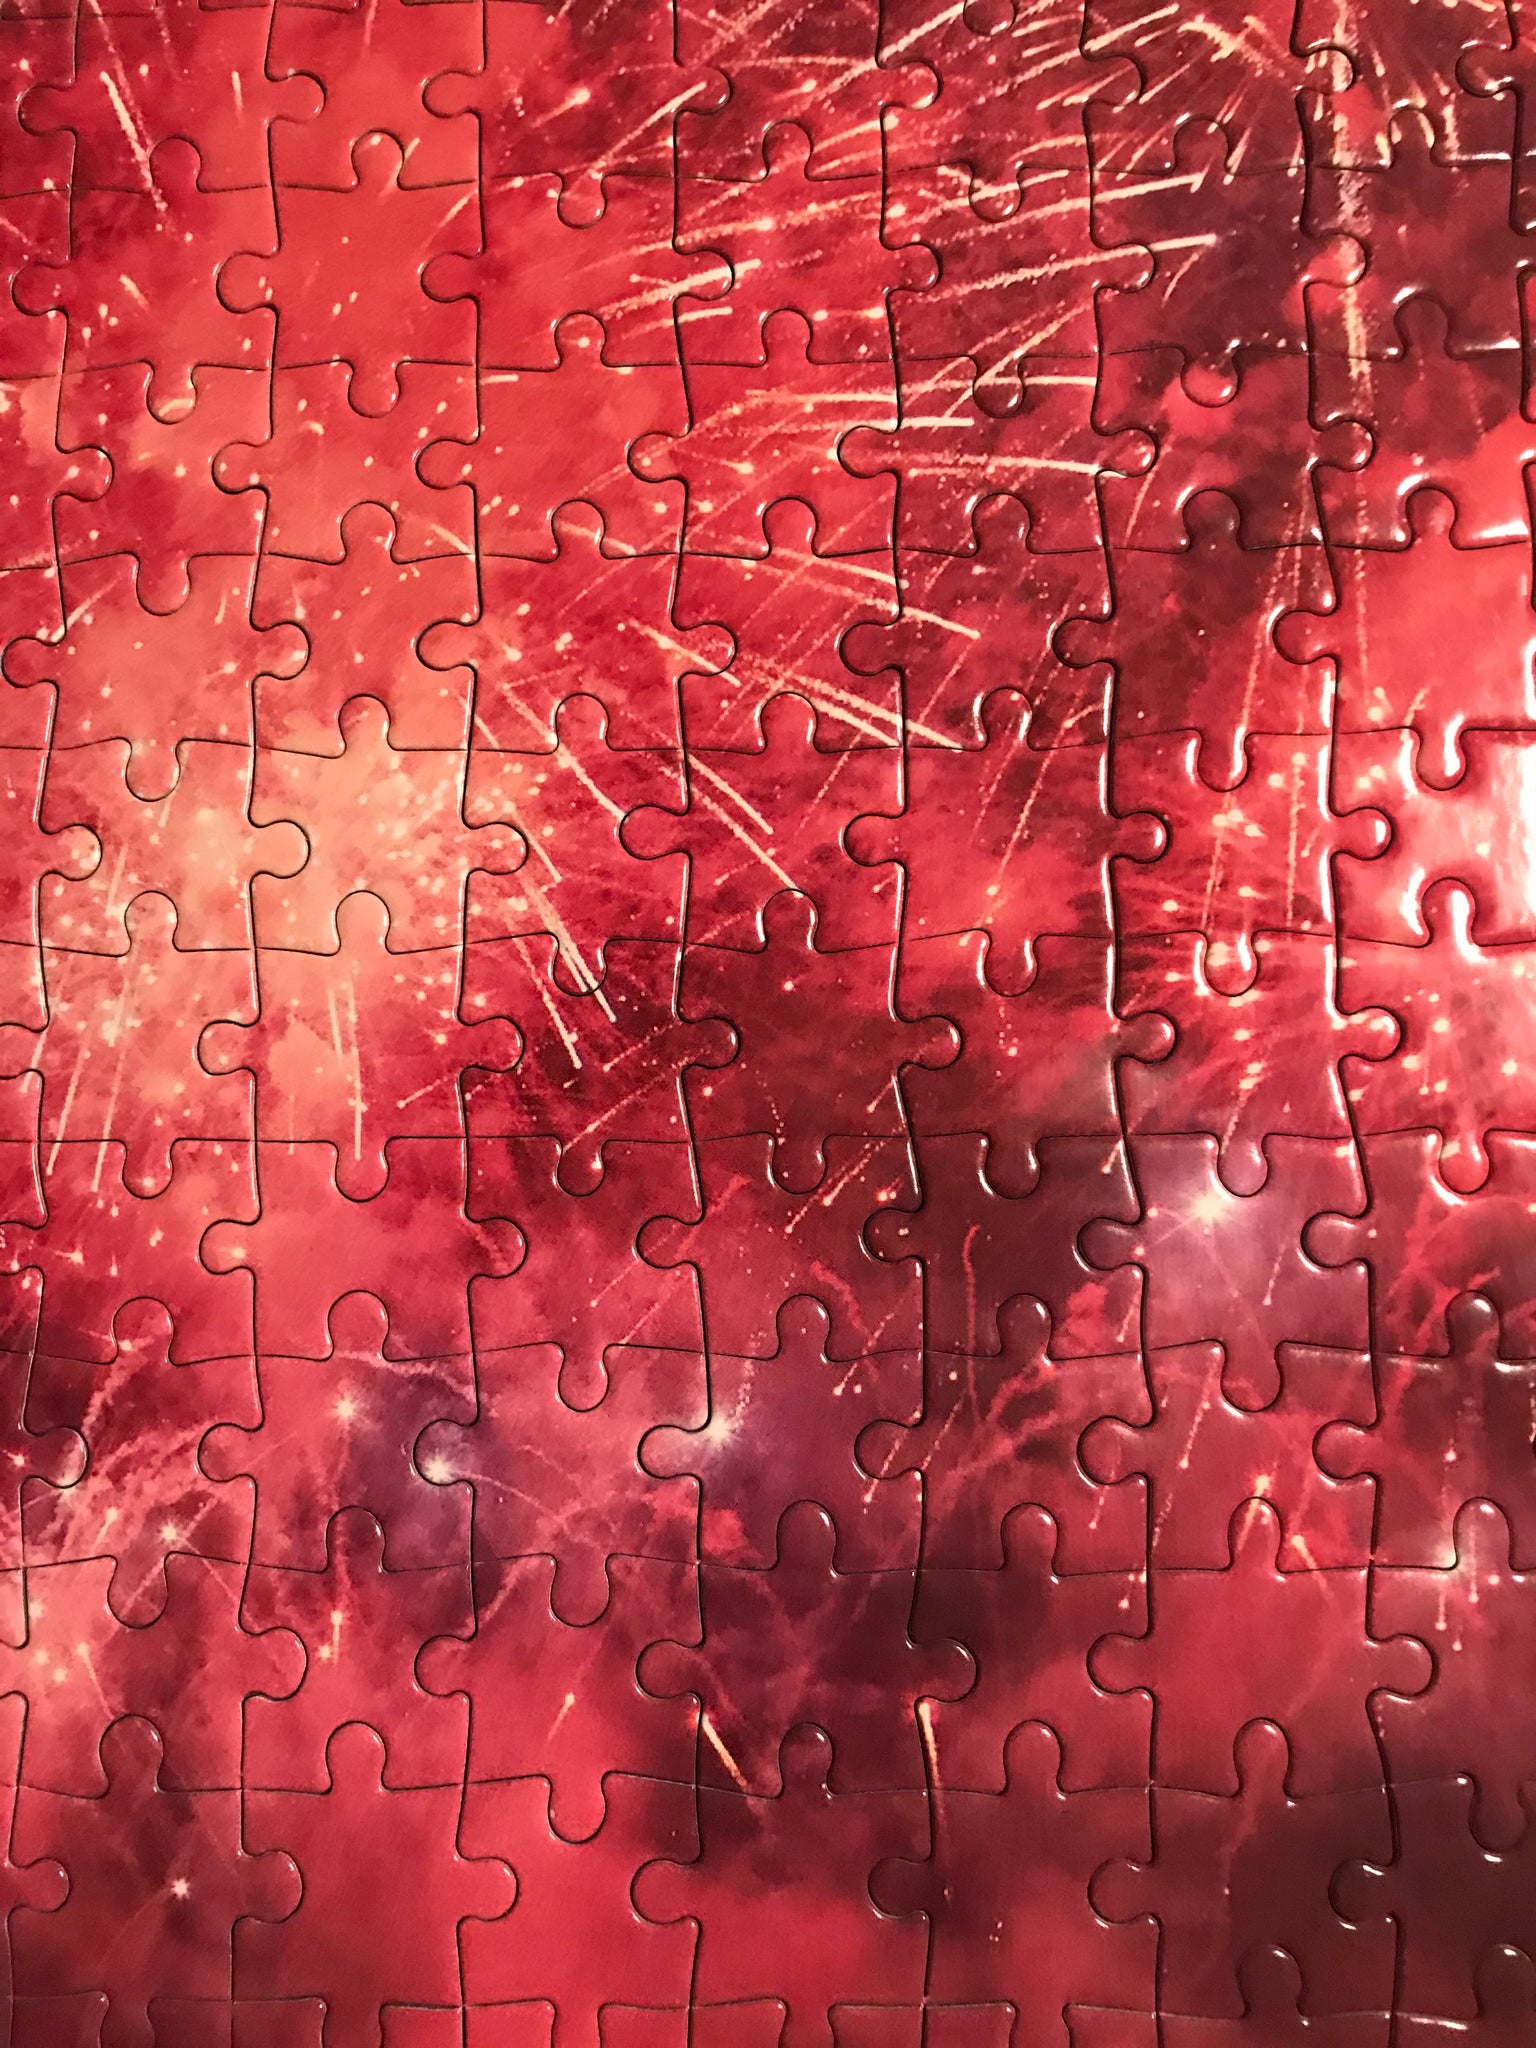 Artist Alessandro Belgiojoso Collector Edition Jigsaw Puzzle